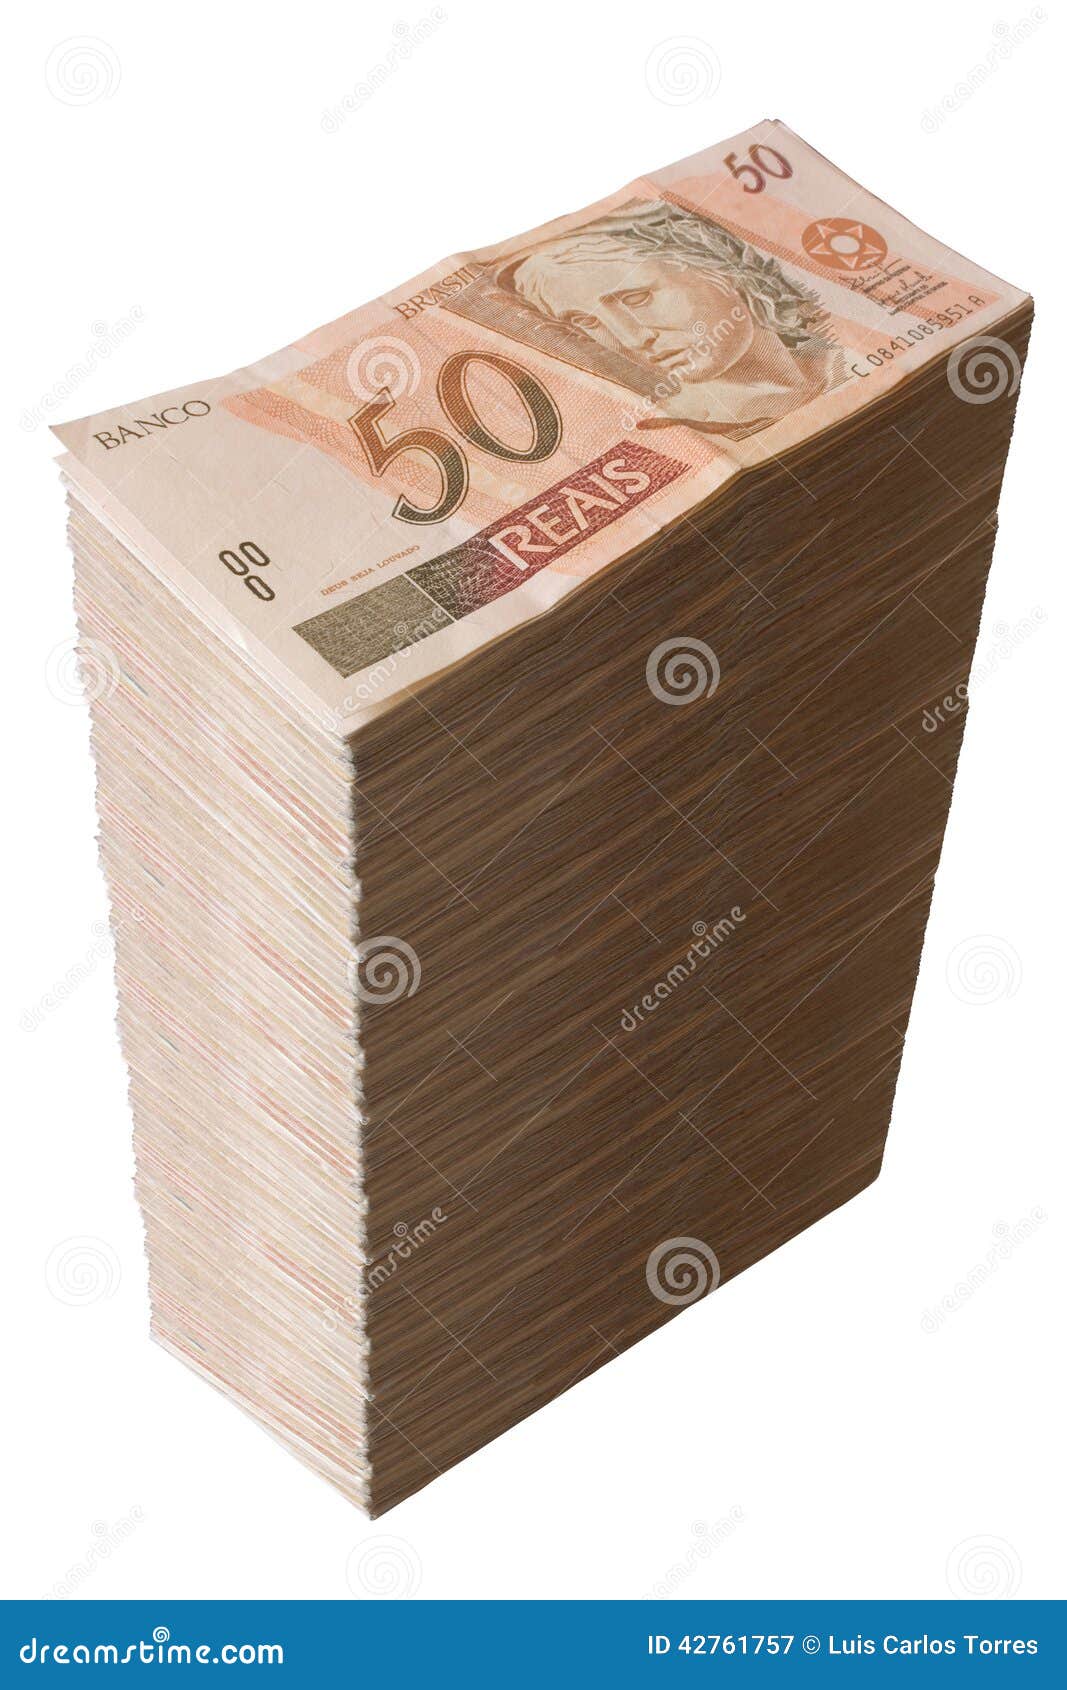 brazilian money - fifty reais pile